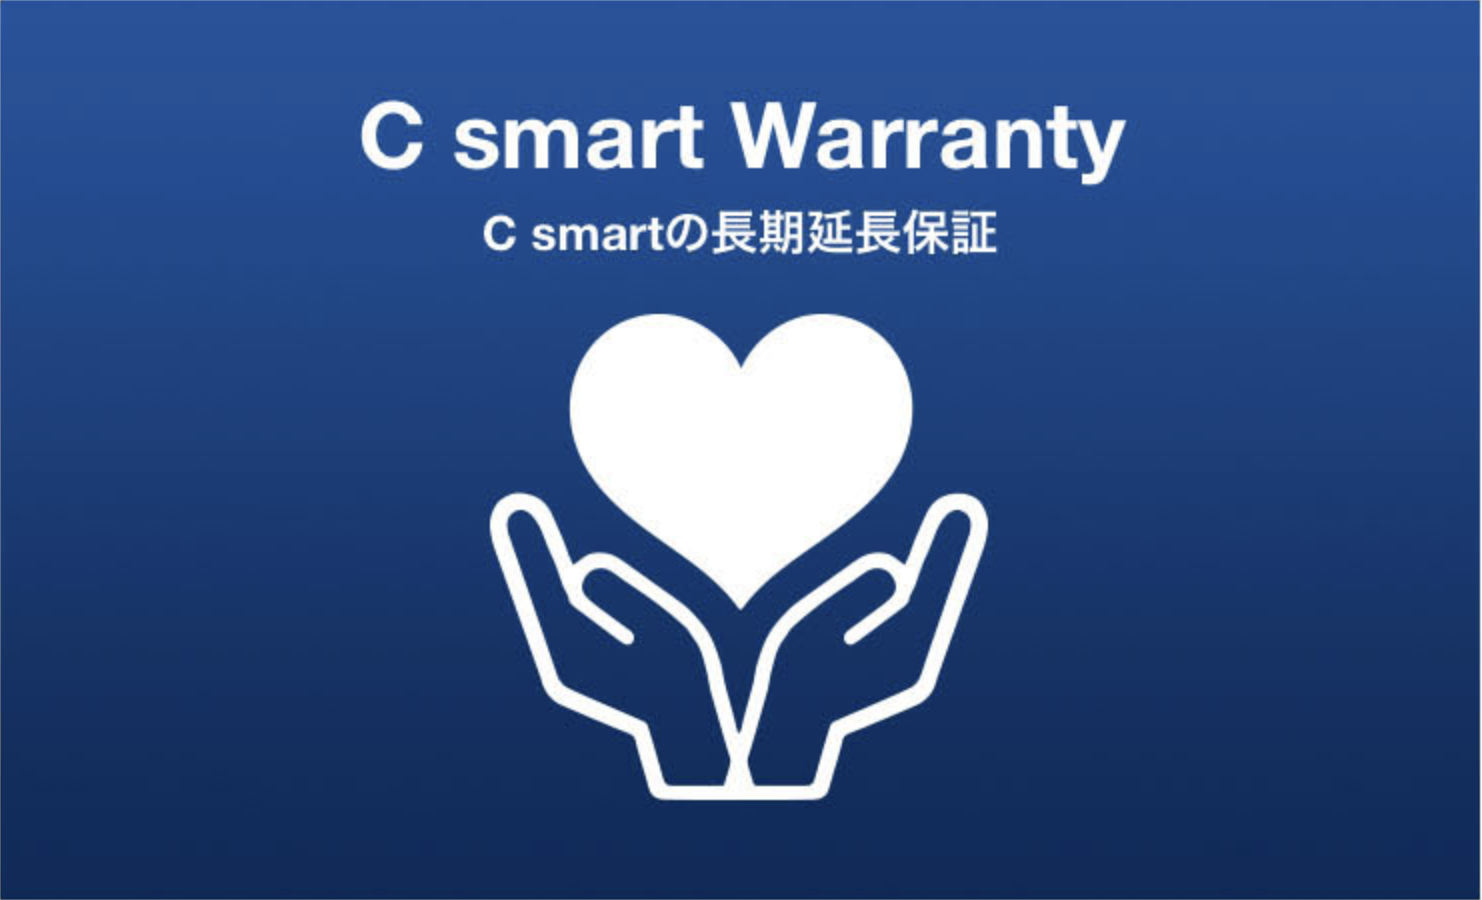 C smart Warranty（長期延長保証）